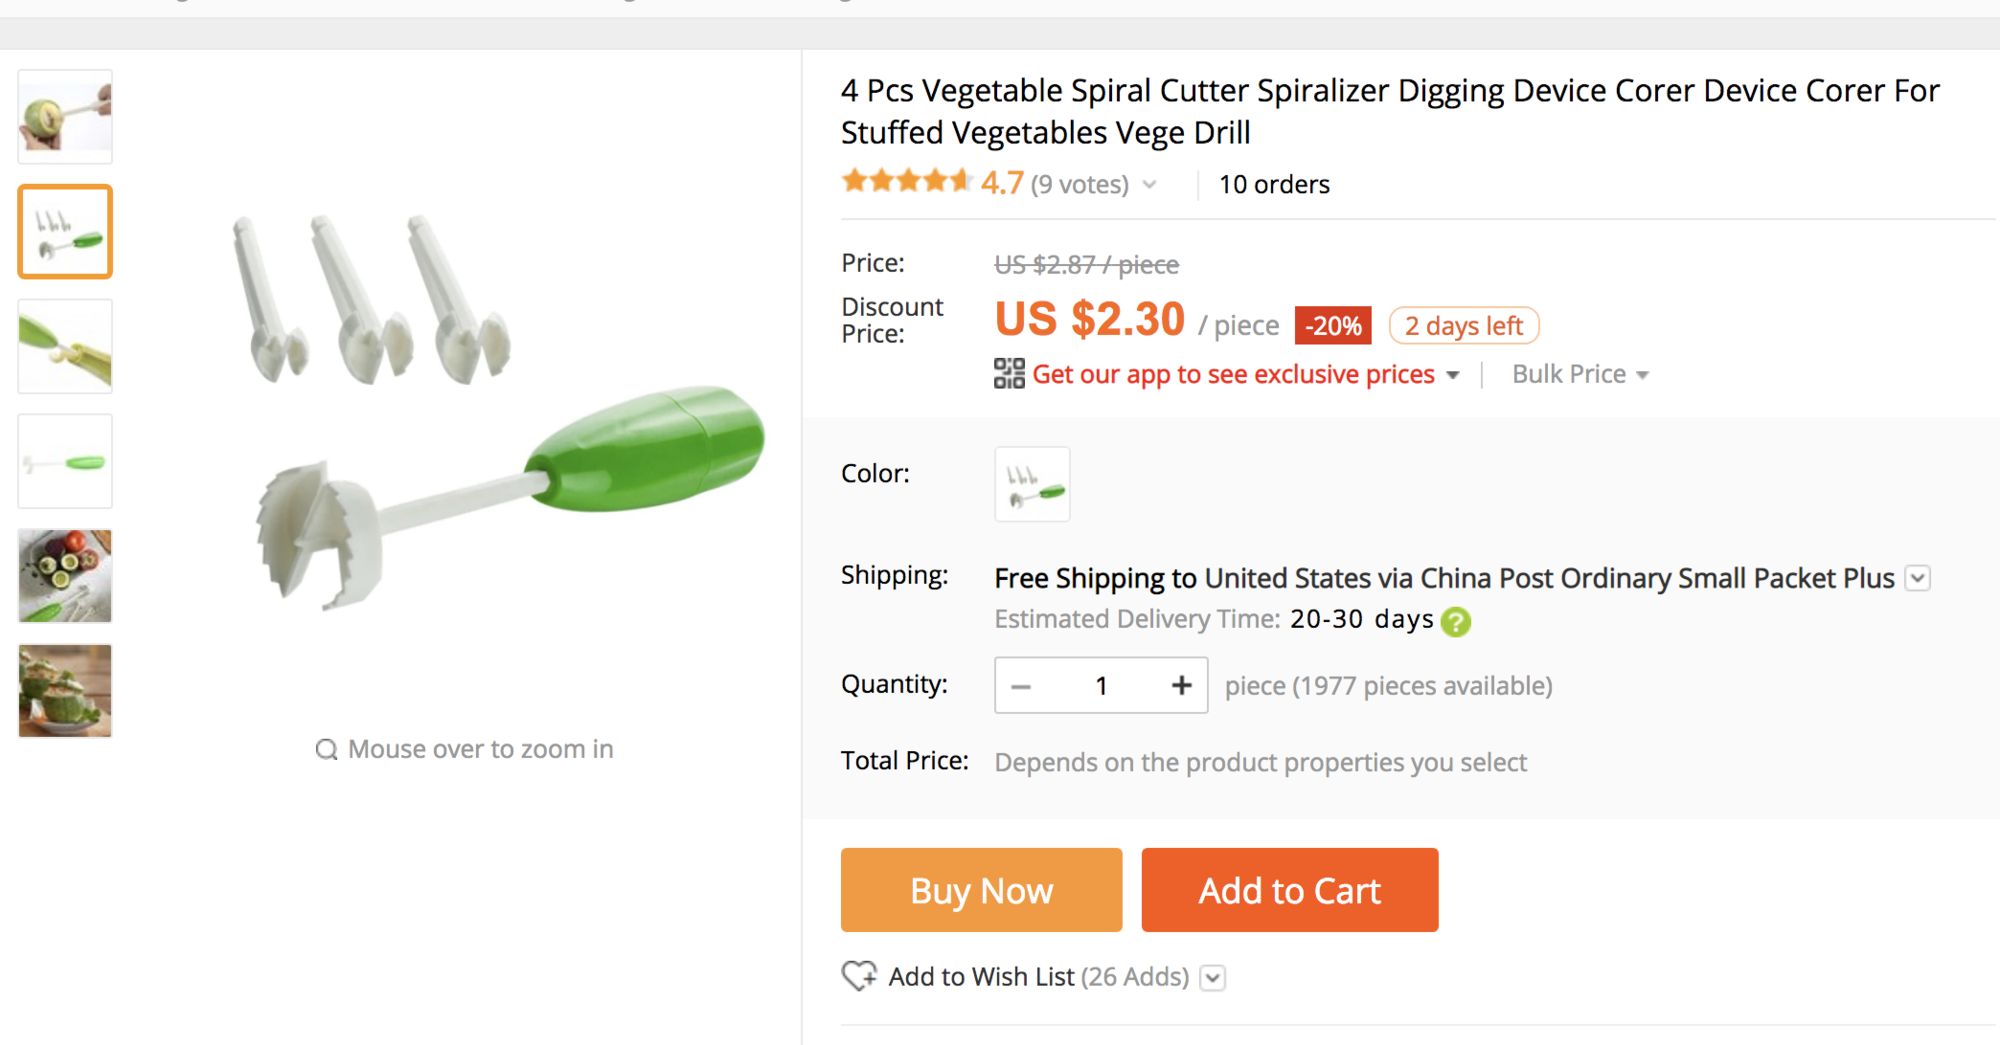 4Pcs Vegetable Spiral Cutter Spiralizer Digging Device Corer